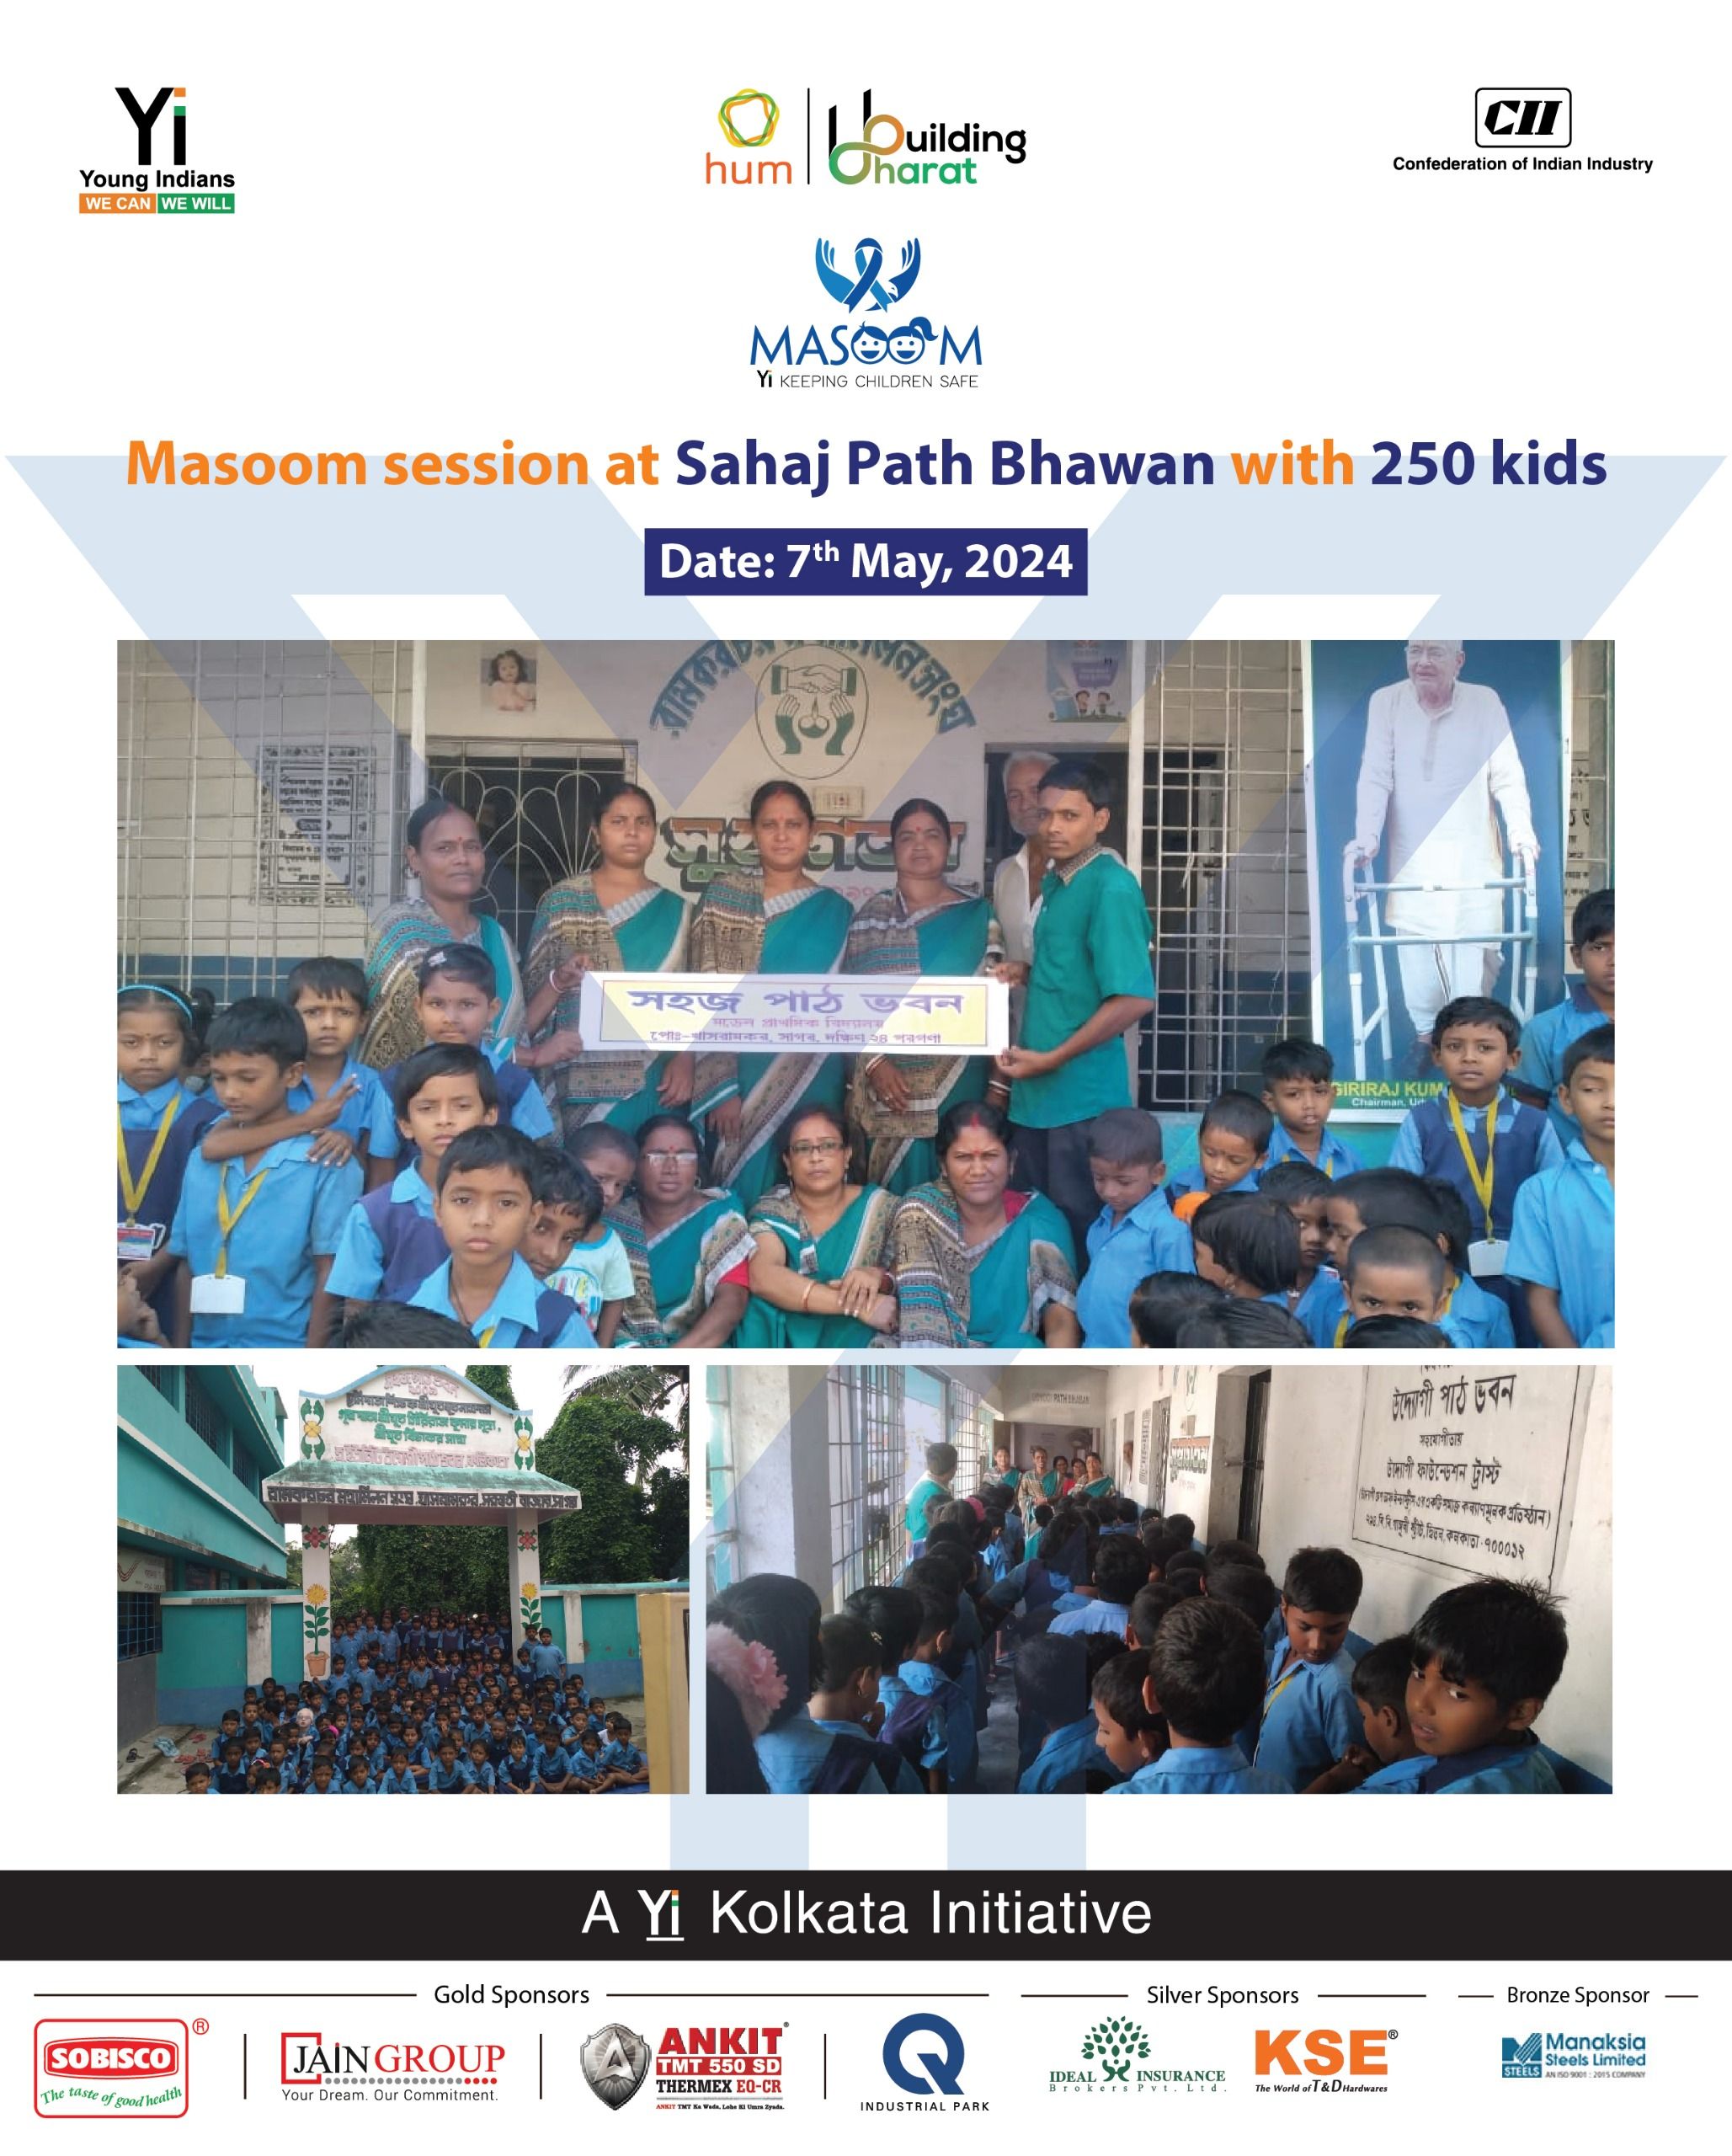 Yi24 | Masoom - Awareness Session at Sahaj Path Bhawan School with 250 Students